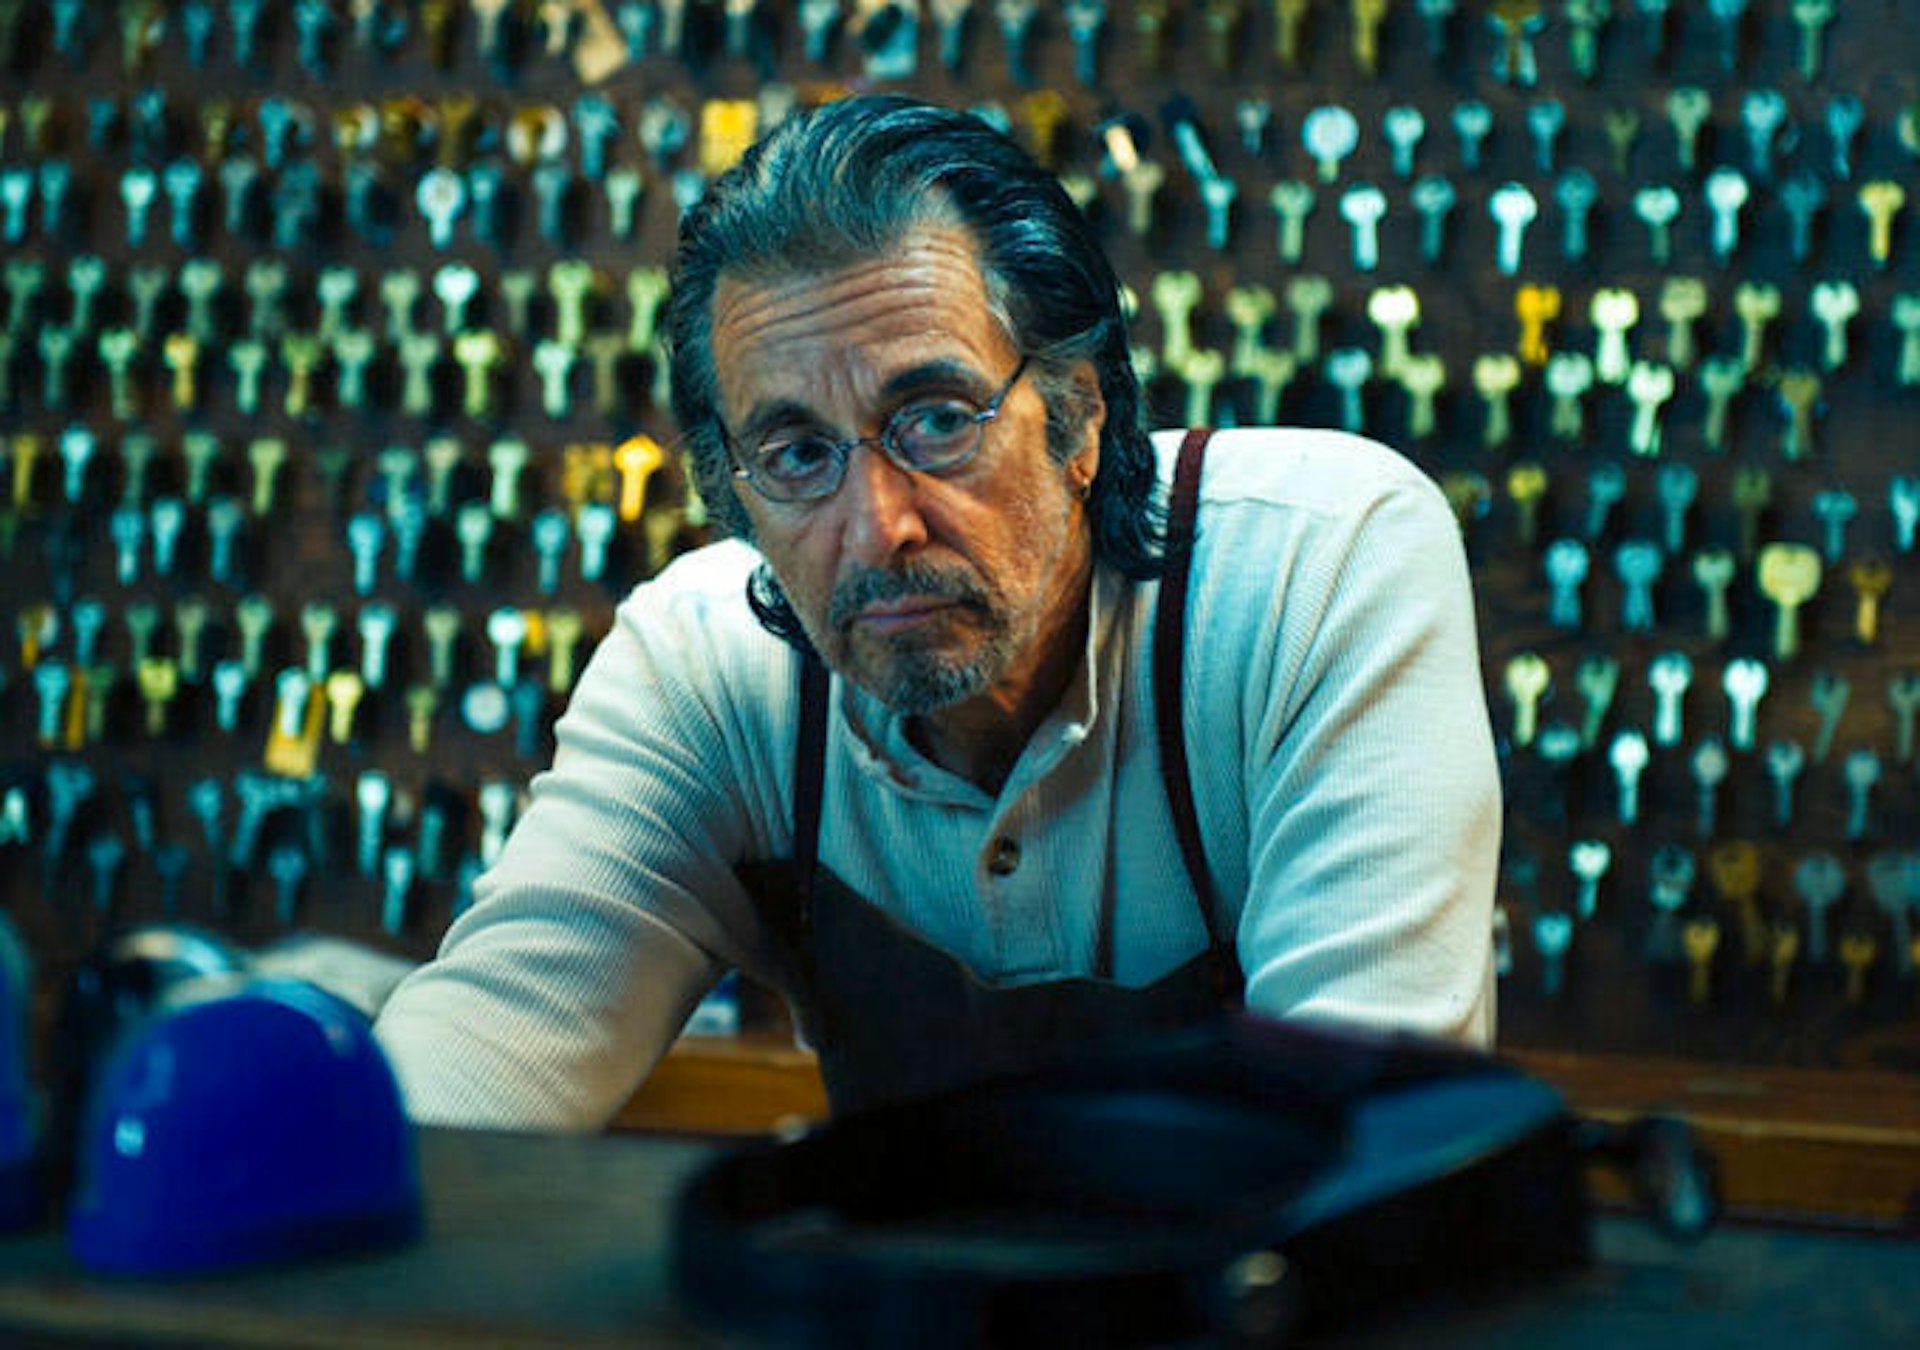 Al Pacino on Harmony Korine: "One of the greatest experiences of my film life."